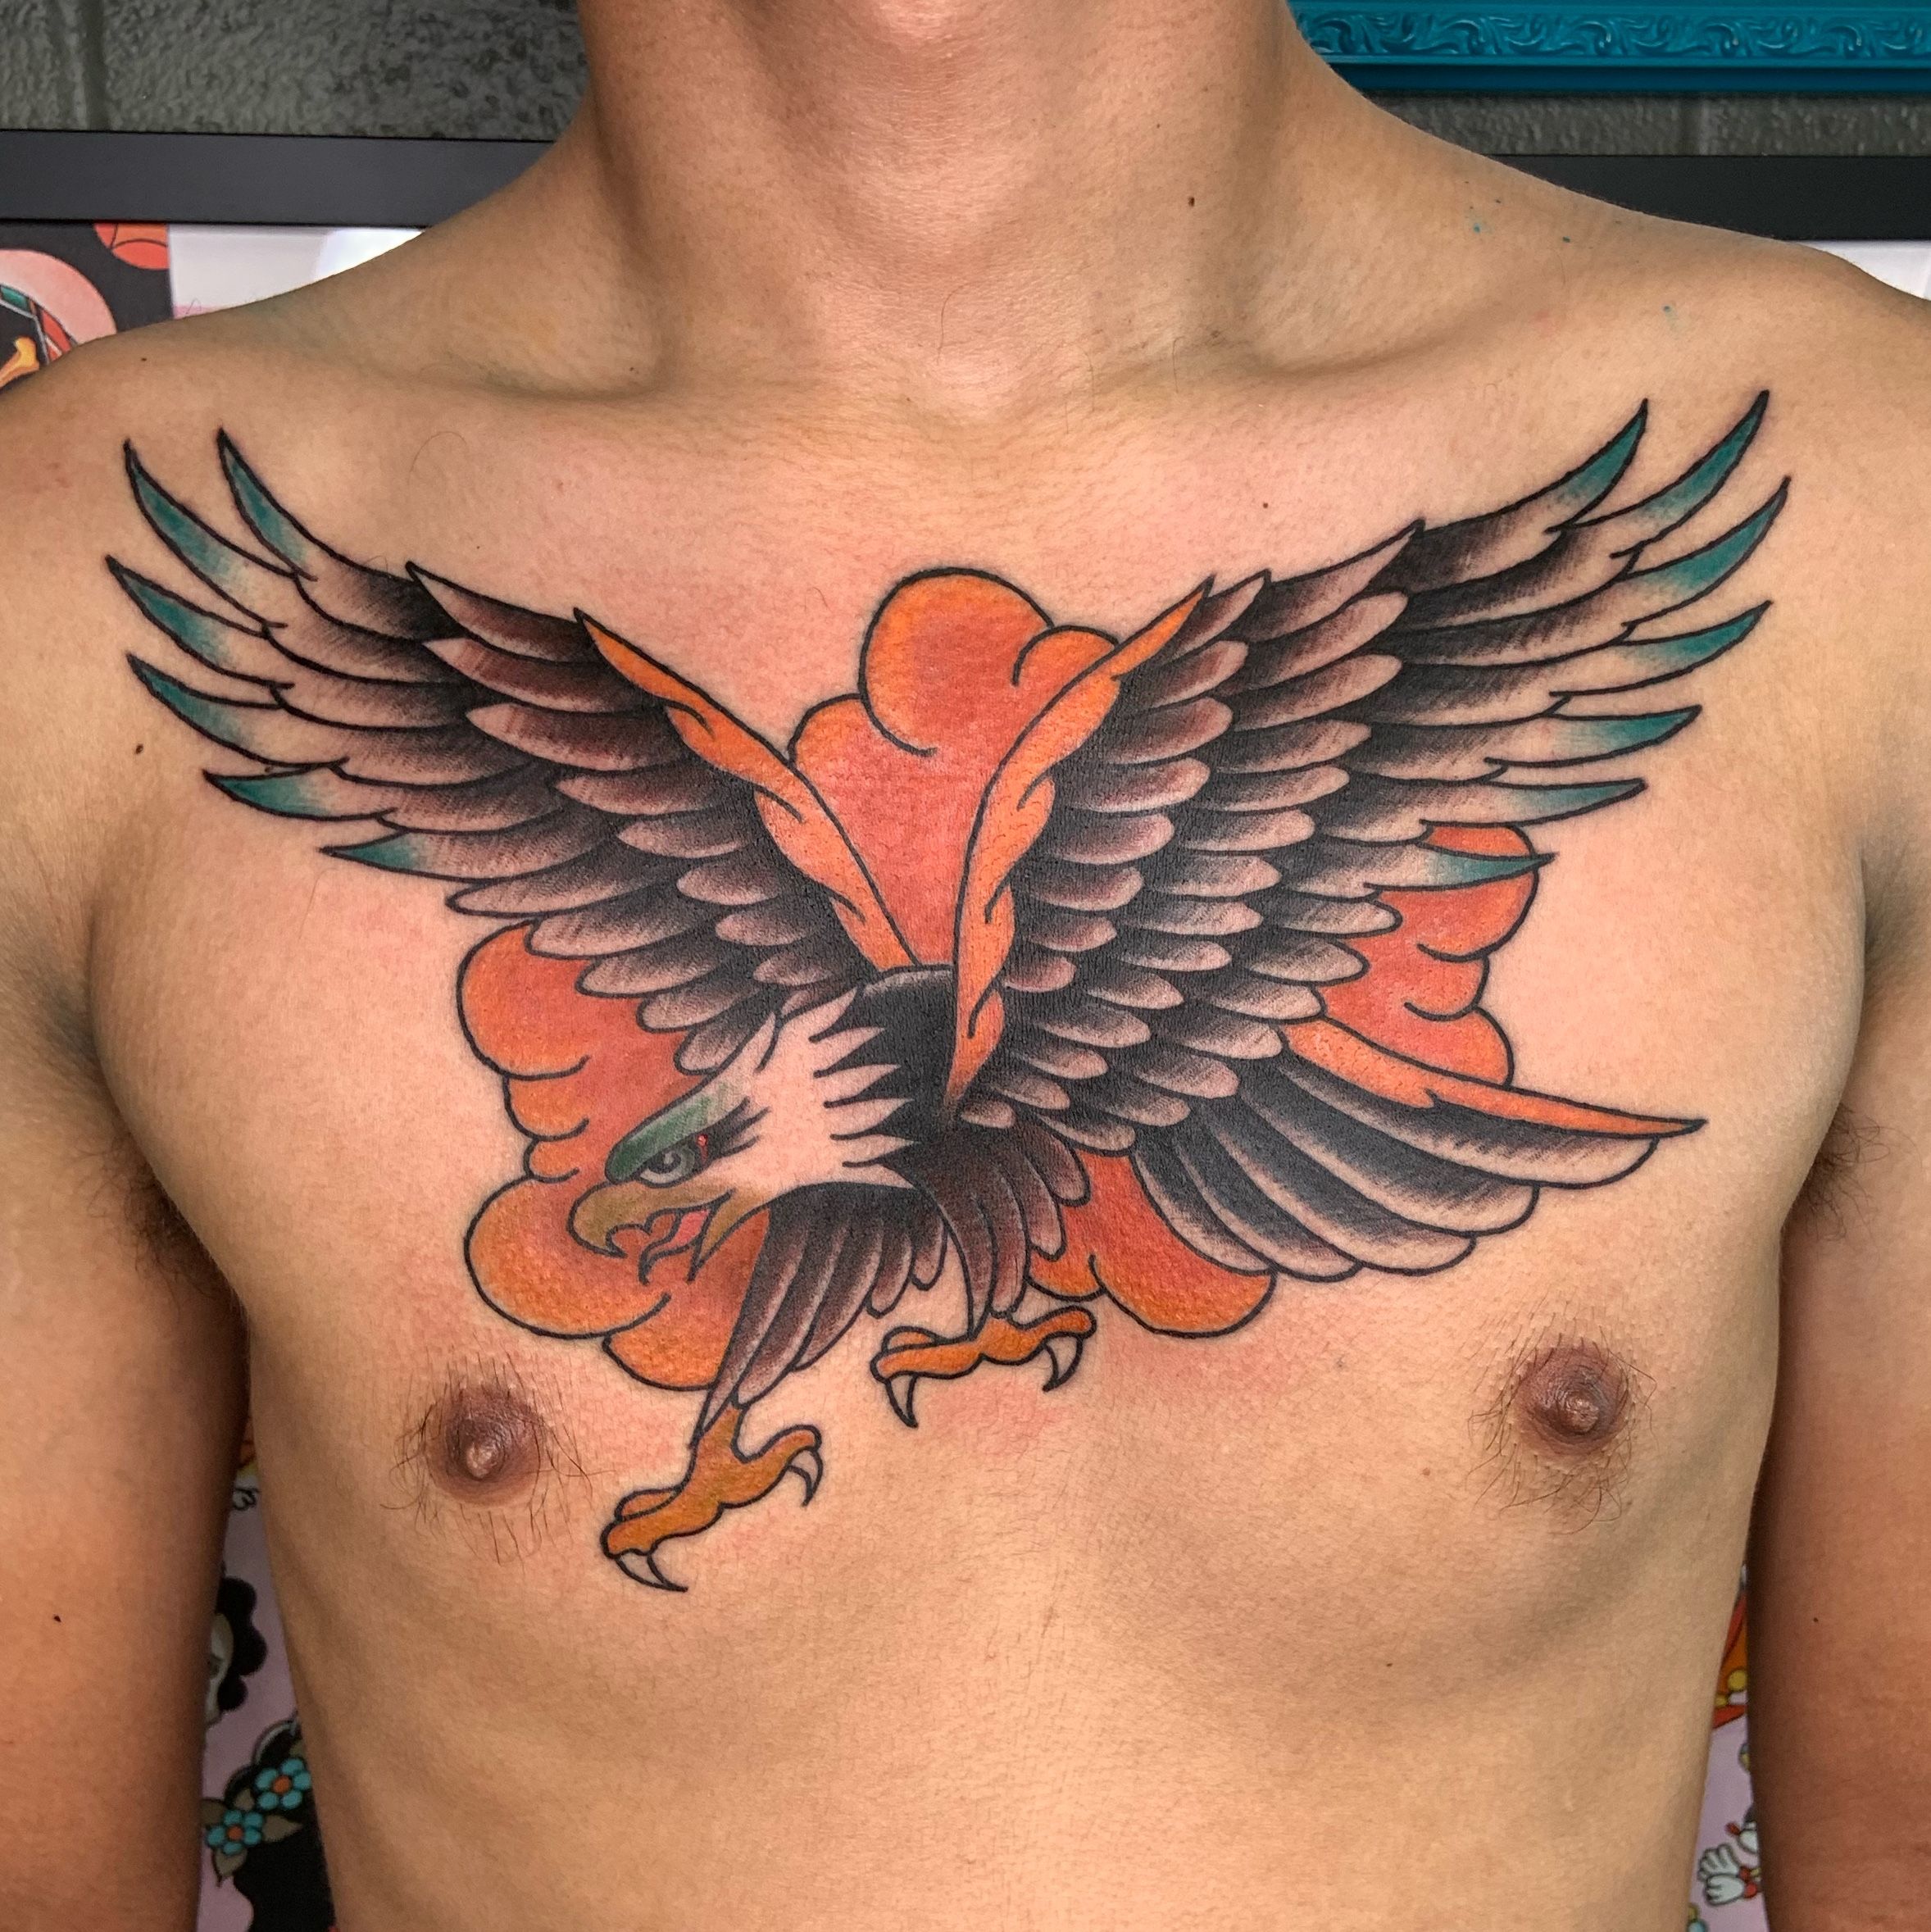 Tattoo uploaded by Noksi • Harpy eagle chest. #noksi #noksitattoo